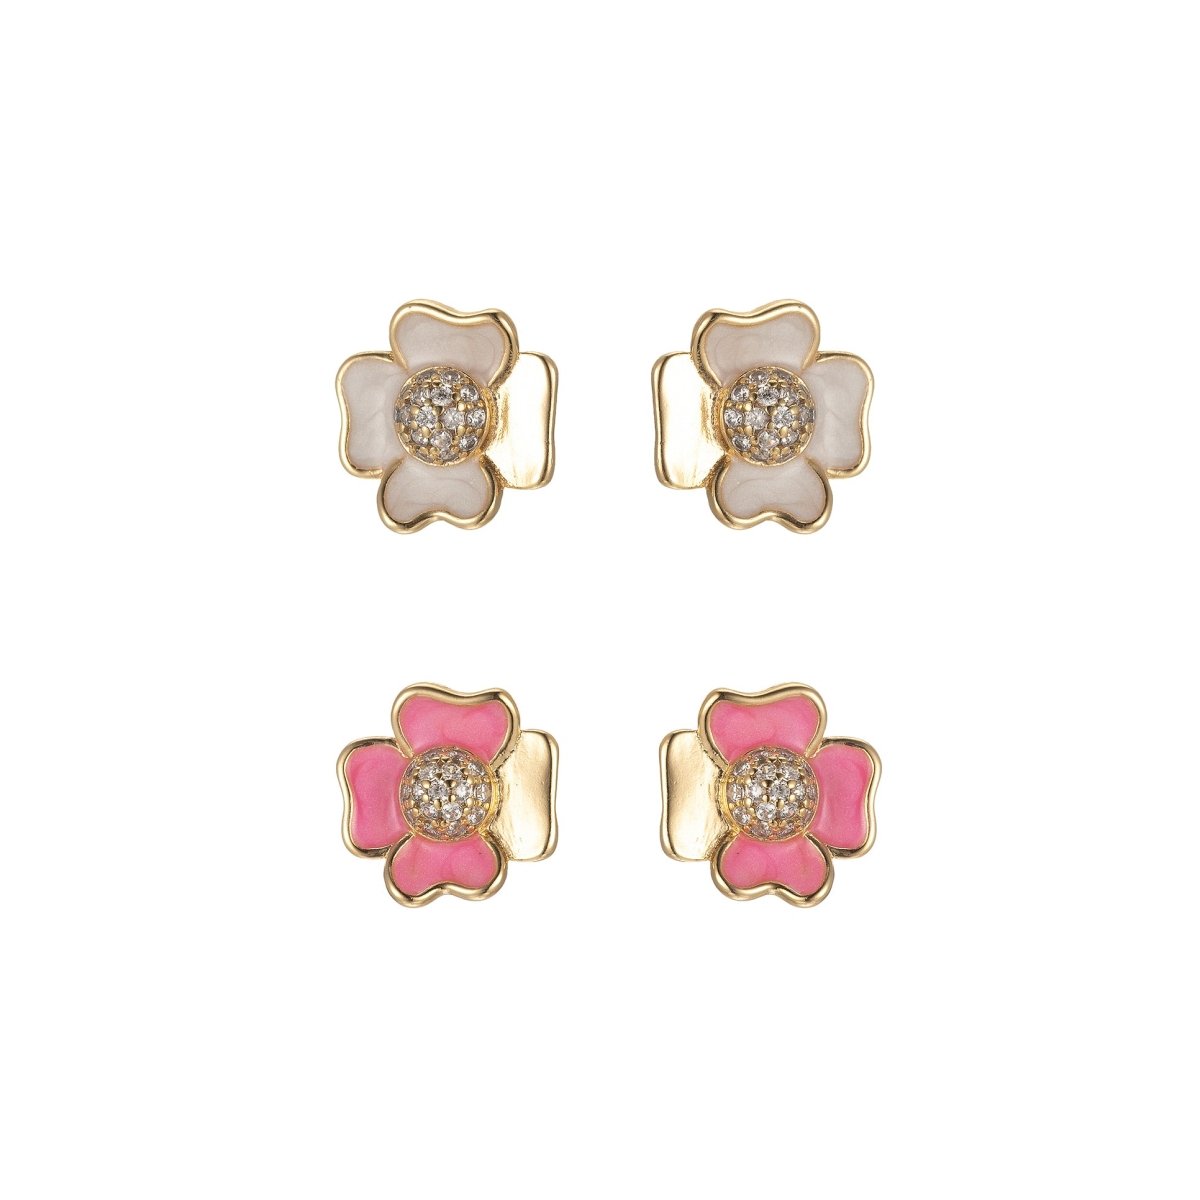 Pink/White Flower Petal Stud Earrings CZ Beauty Floral Nature Theme Daily Wear Earring Jewelry P-192~P-193 - DLUXCA